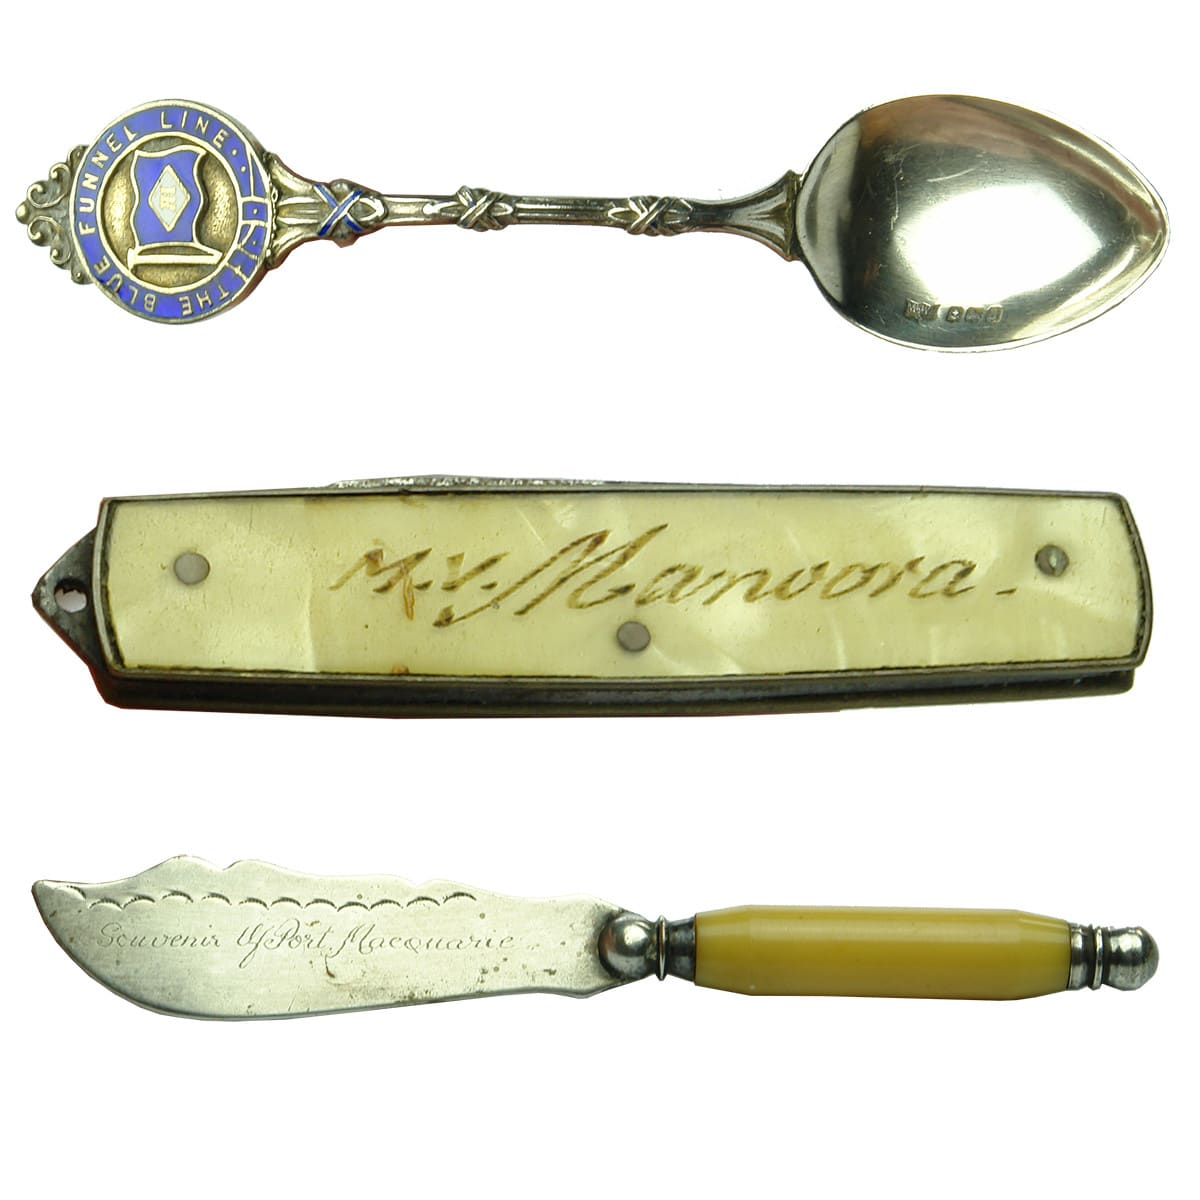 3 Items. 2 Knives & a Teaspoon. Souvenir of Port Macquarie and M V Manoora penknife. Spoon - Blue Funnel Line, TSS Ascanius